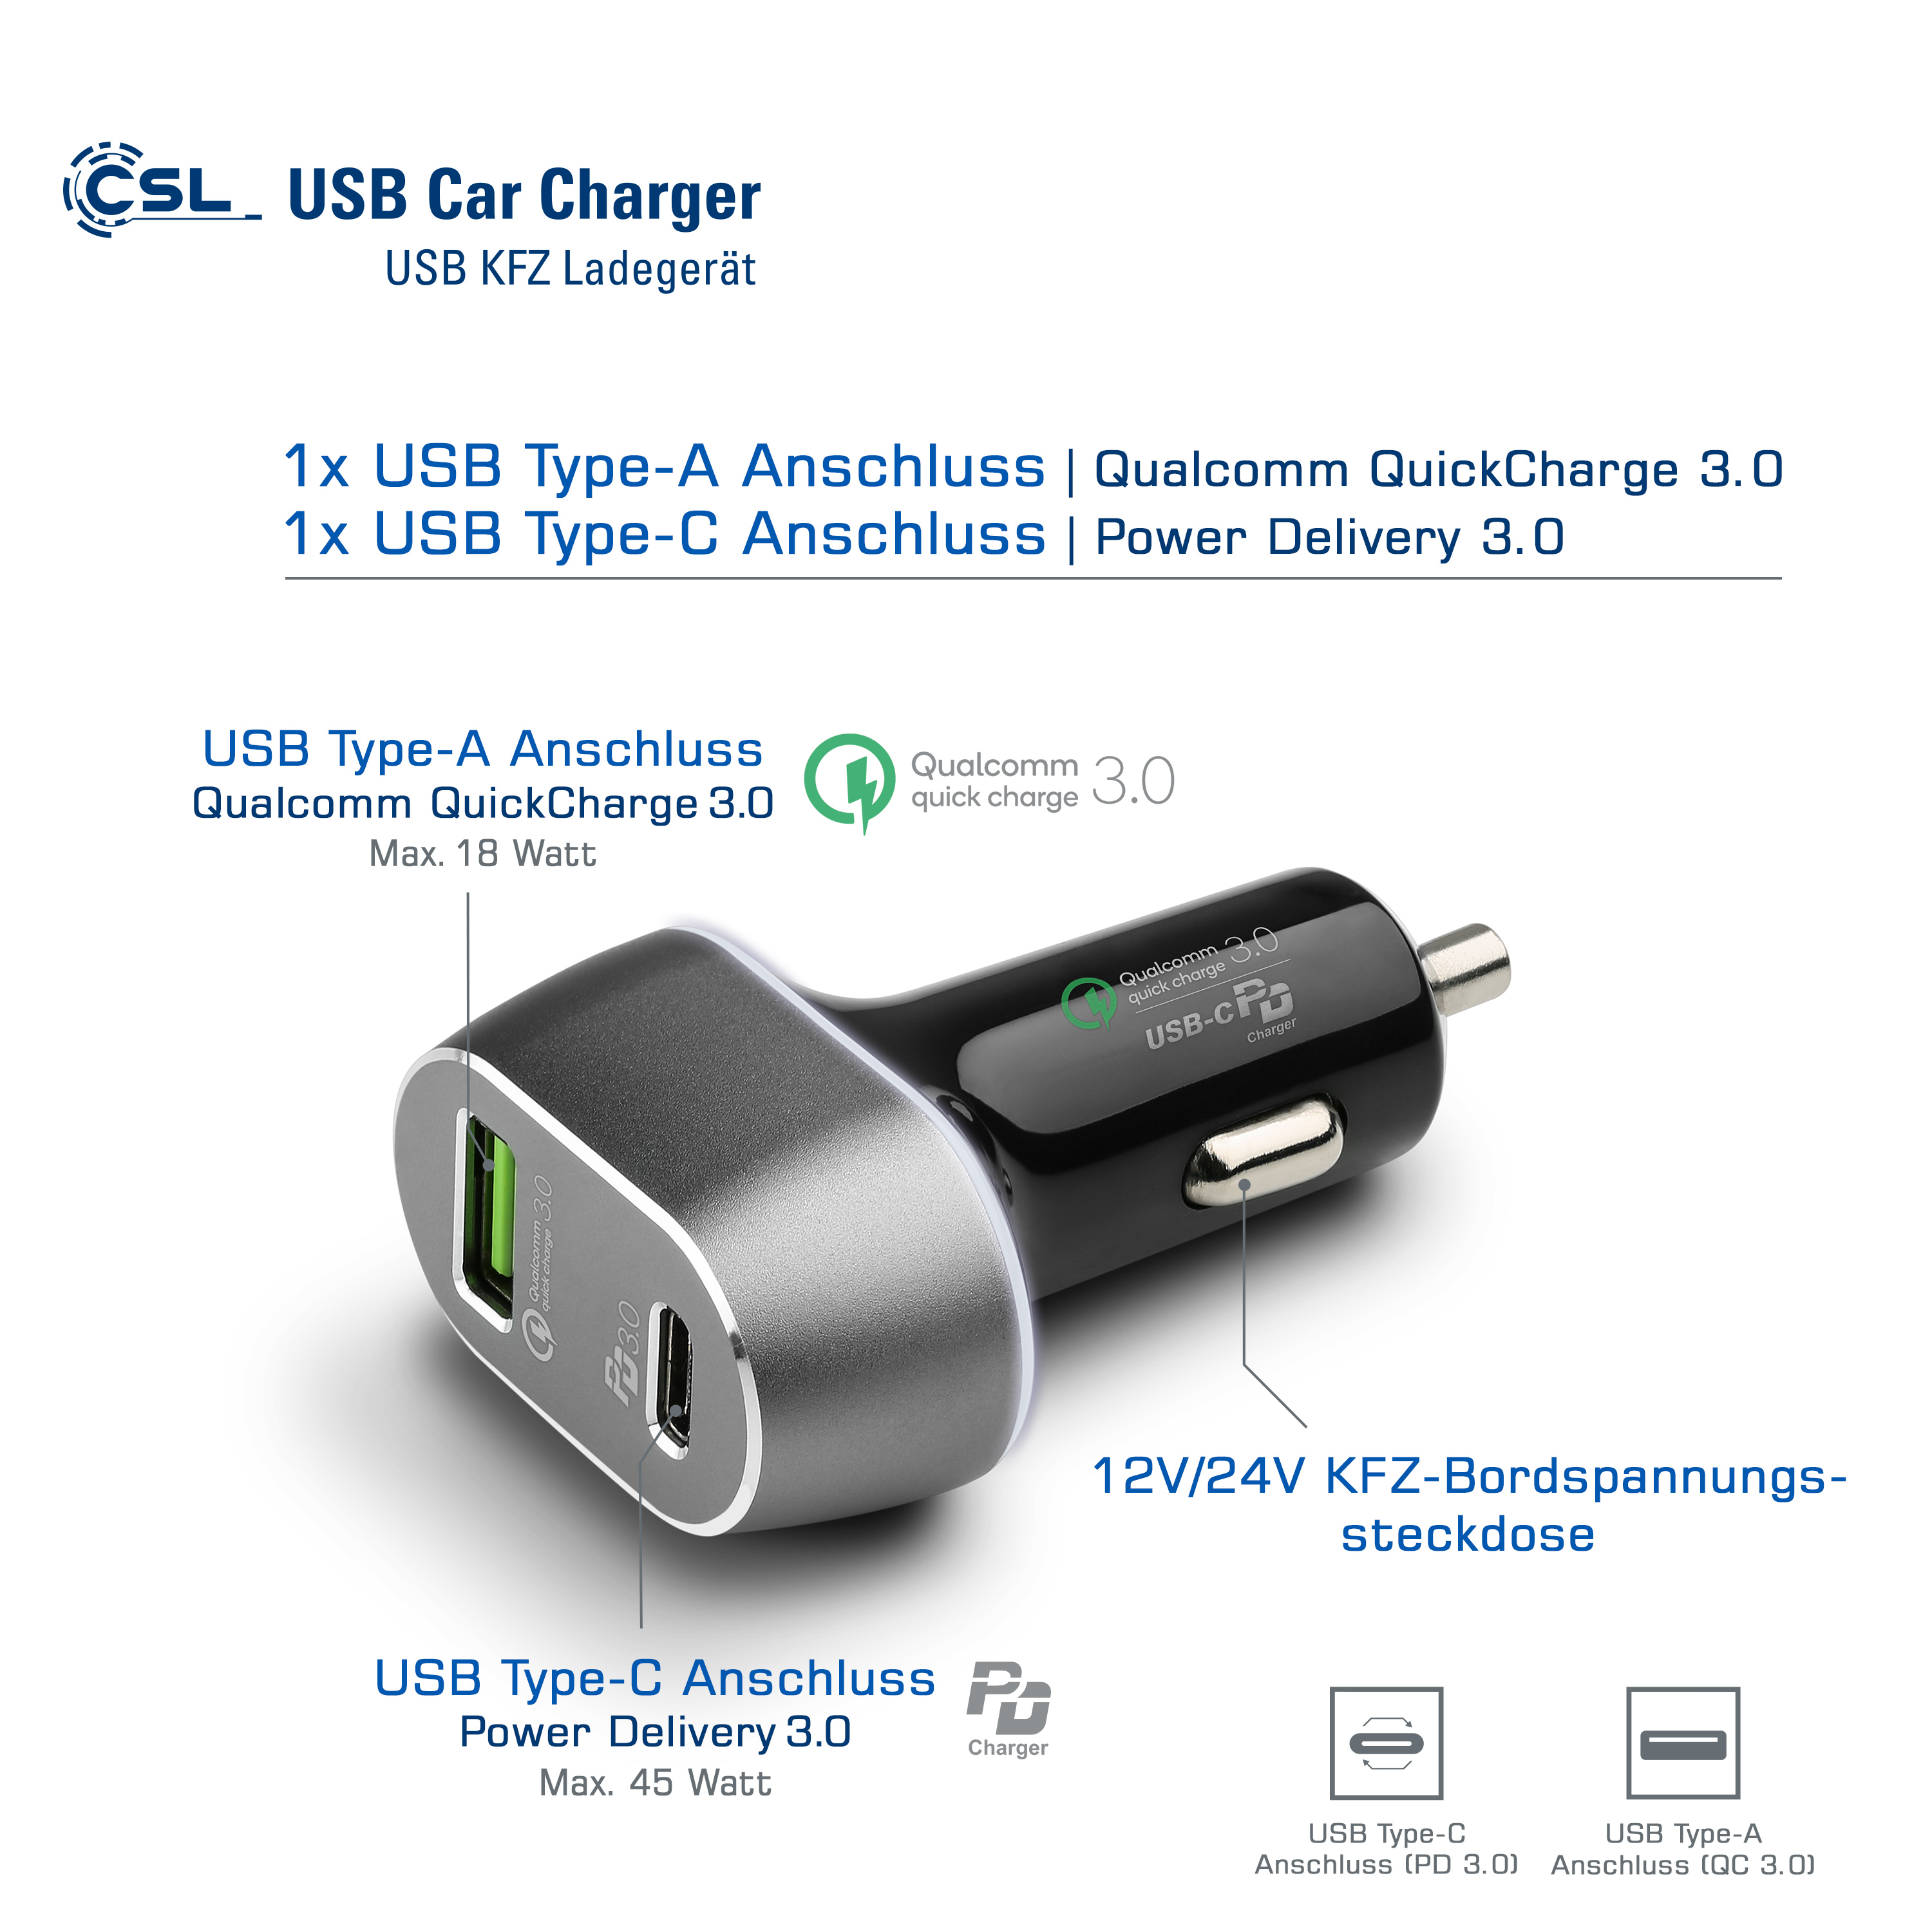 CSL 2-Port silber-schwarz 63W USB Universal, Charger Car USB KFZ Ladegerät LED